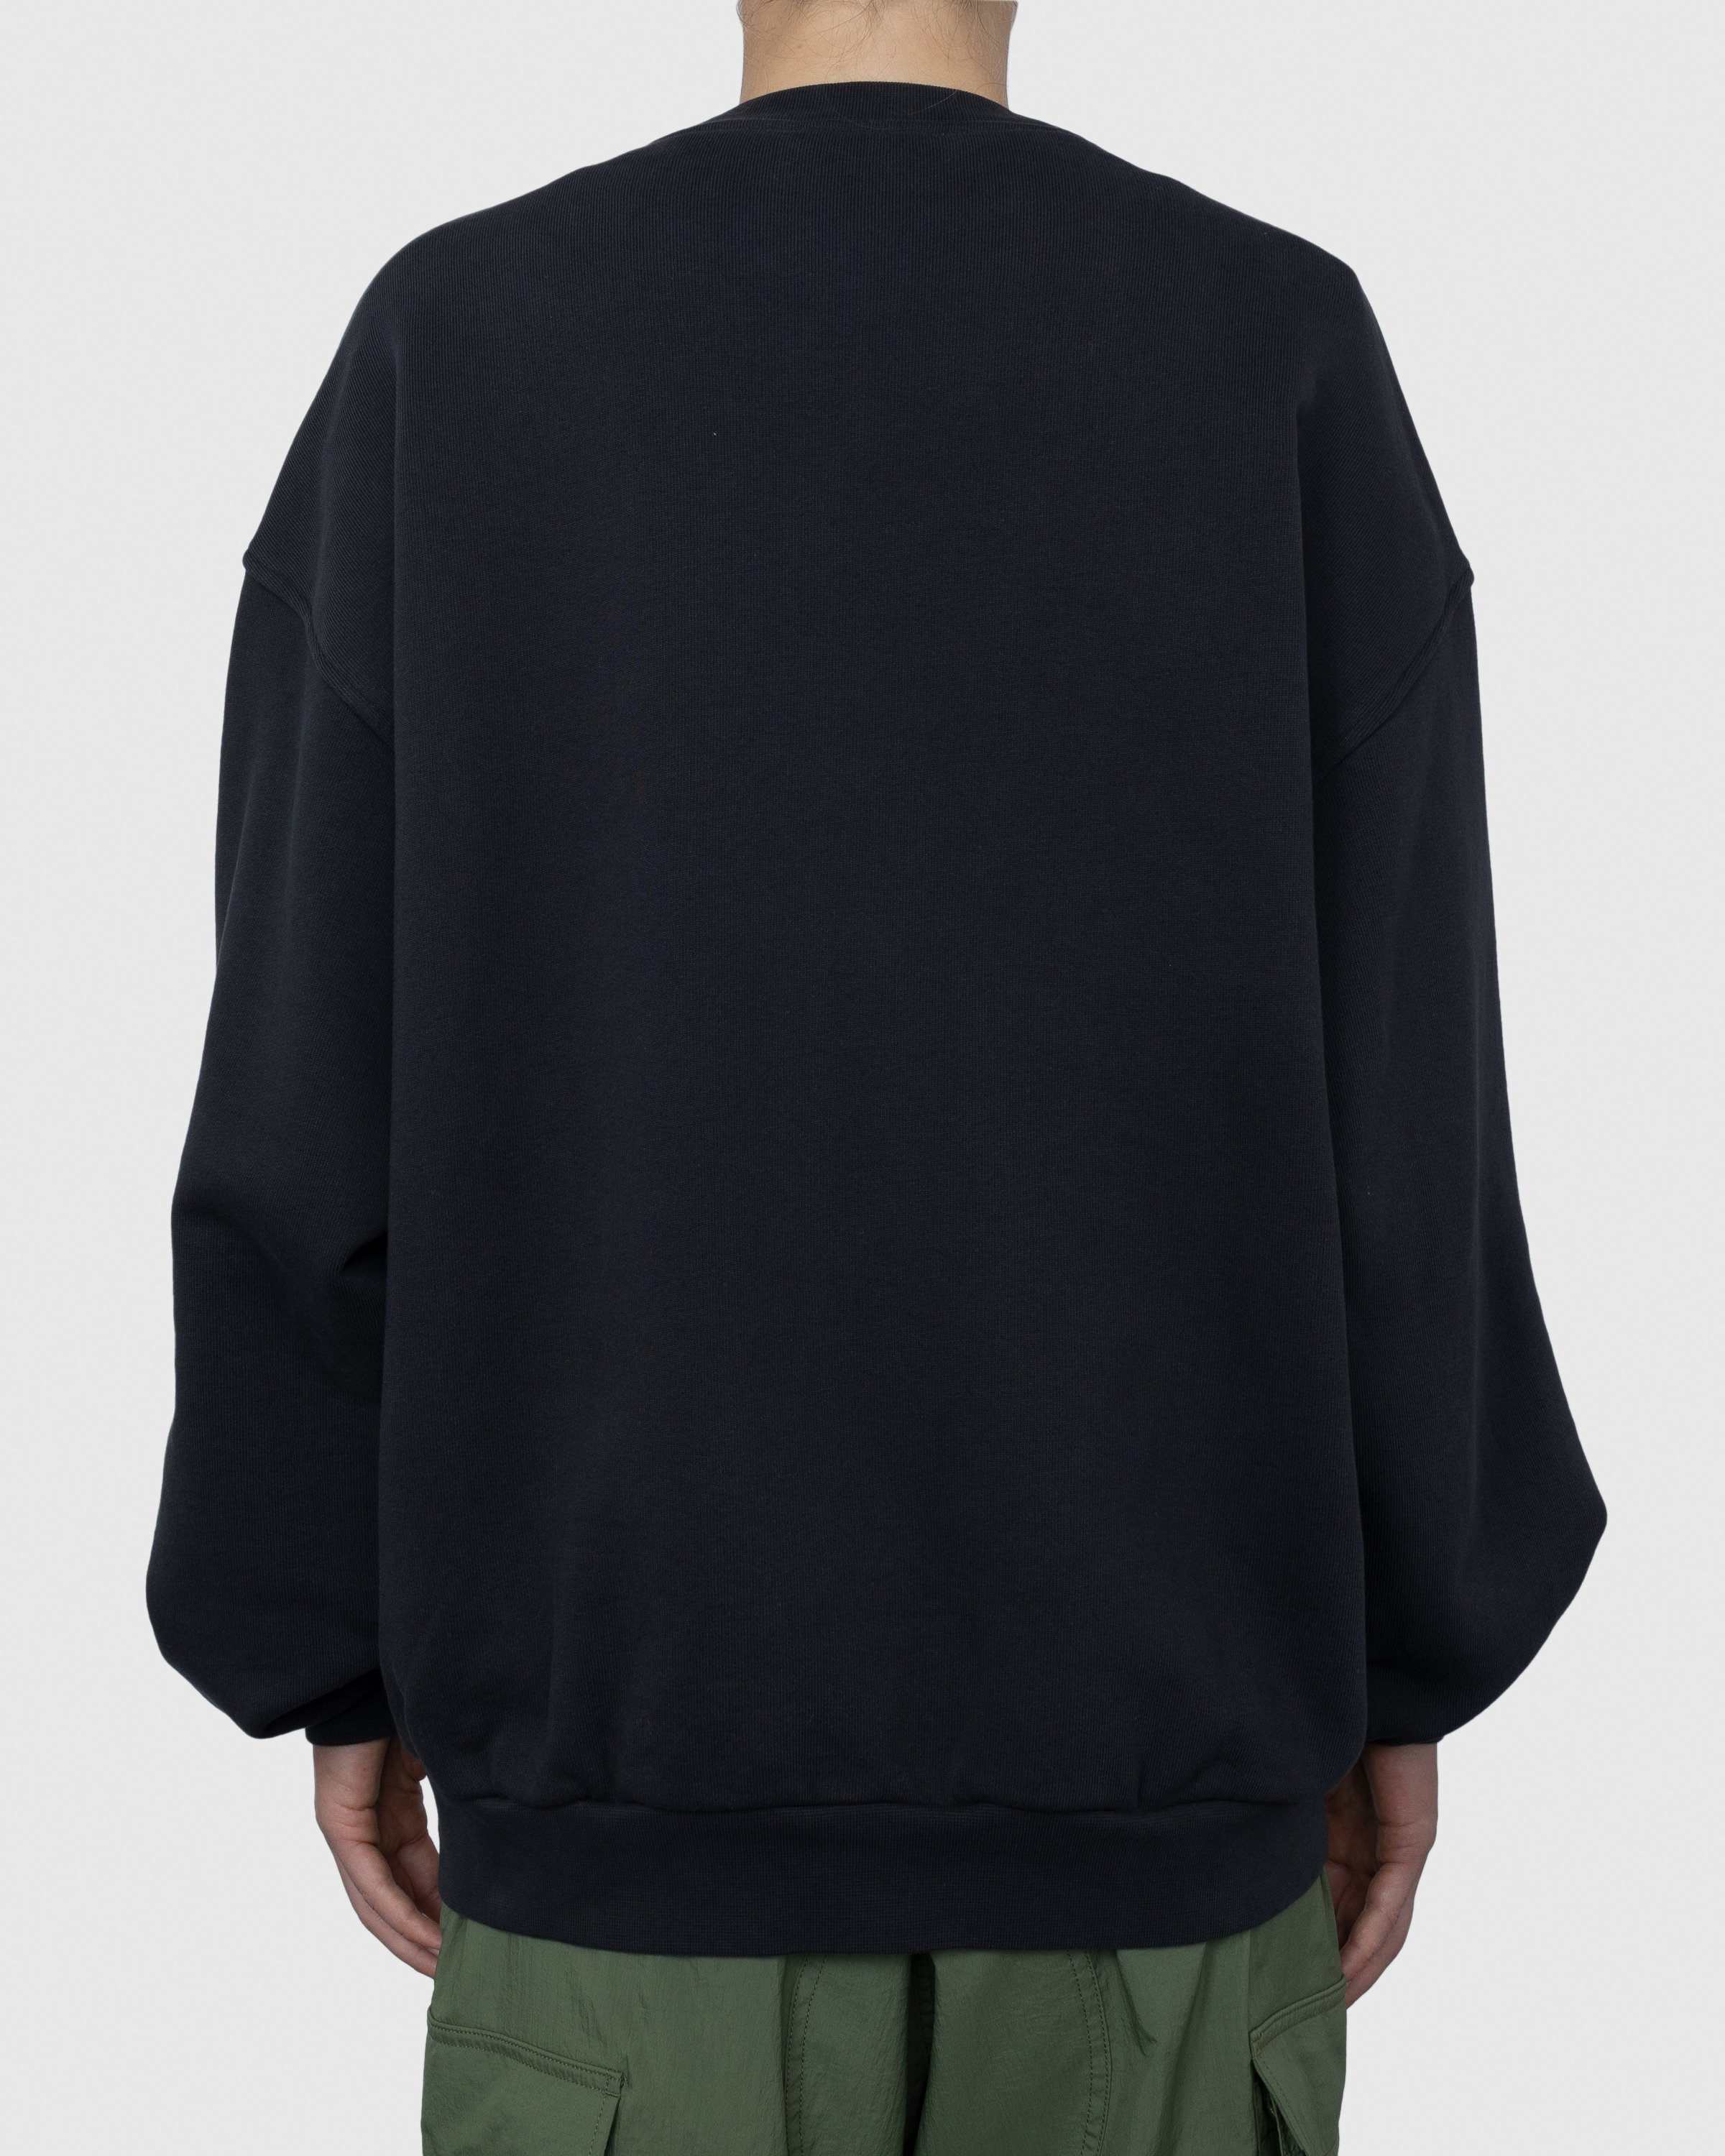 Acne Studios - Bubble Logo Crewneck Sweater Anthracite Grey - Clothing - Black - Image 4